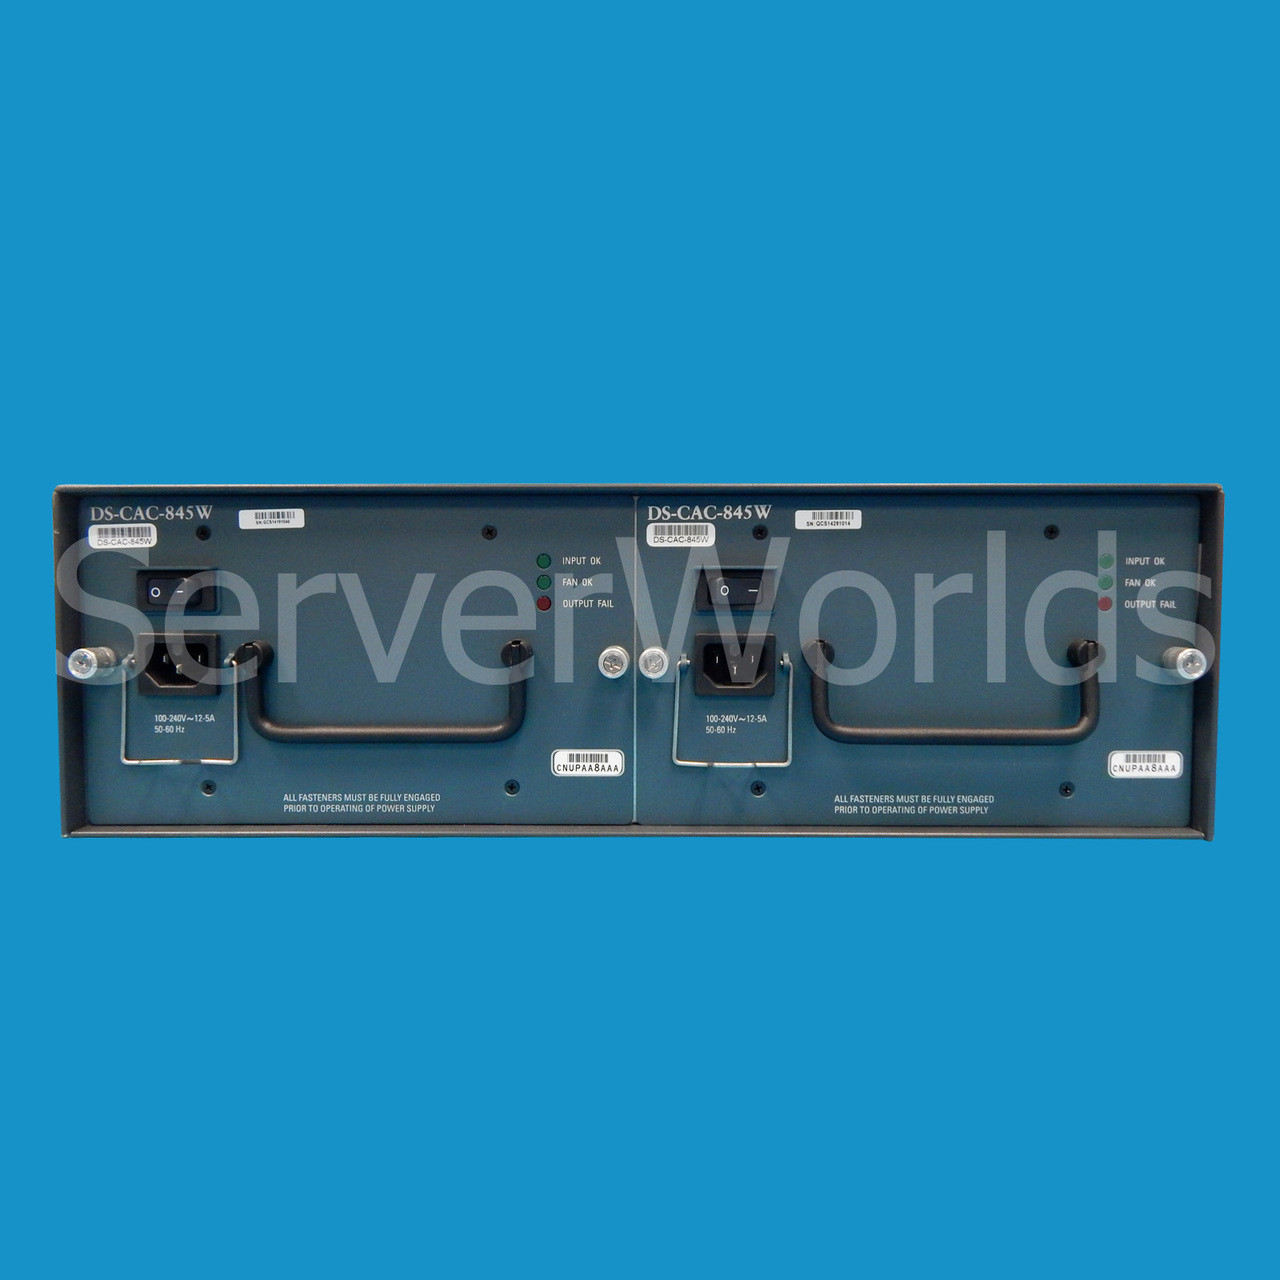 HP AG851B MDS 9222I Multi Service Fabric Switch